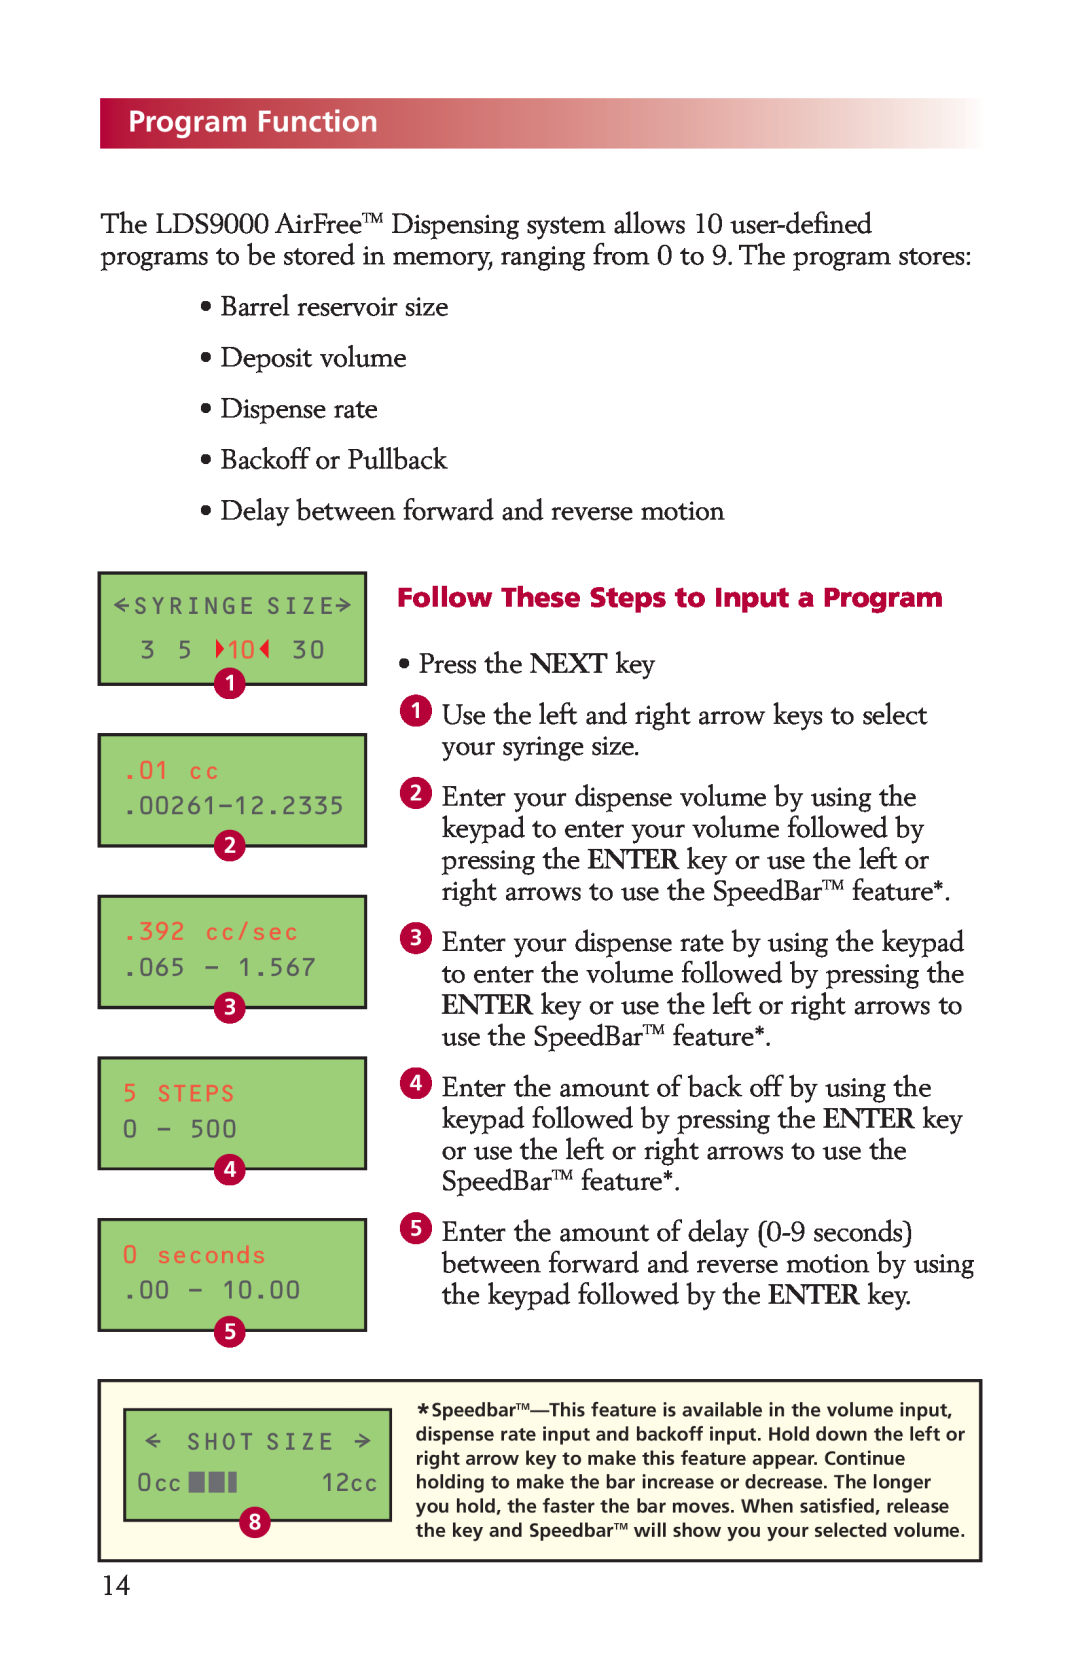 Fishman LDS9000 manual ProgramFunction, Follow These Steps to Input a Program 